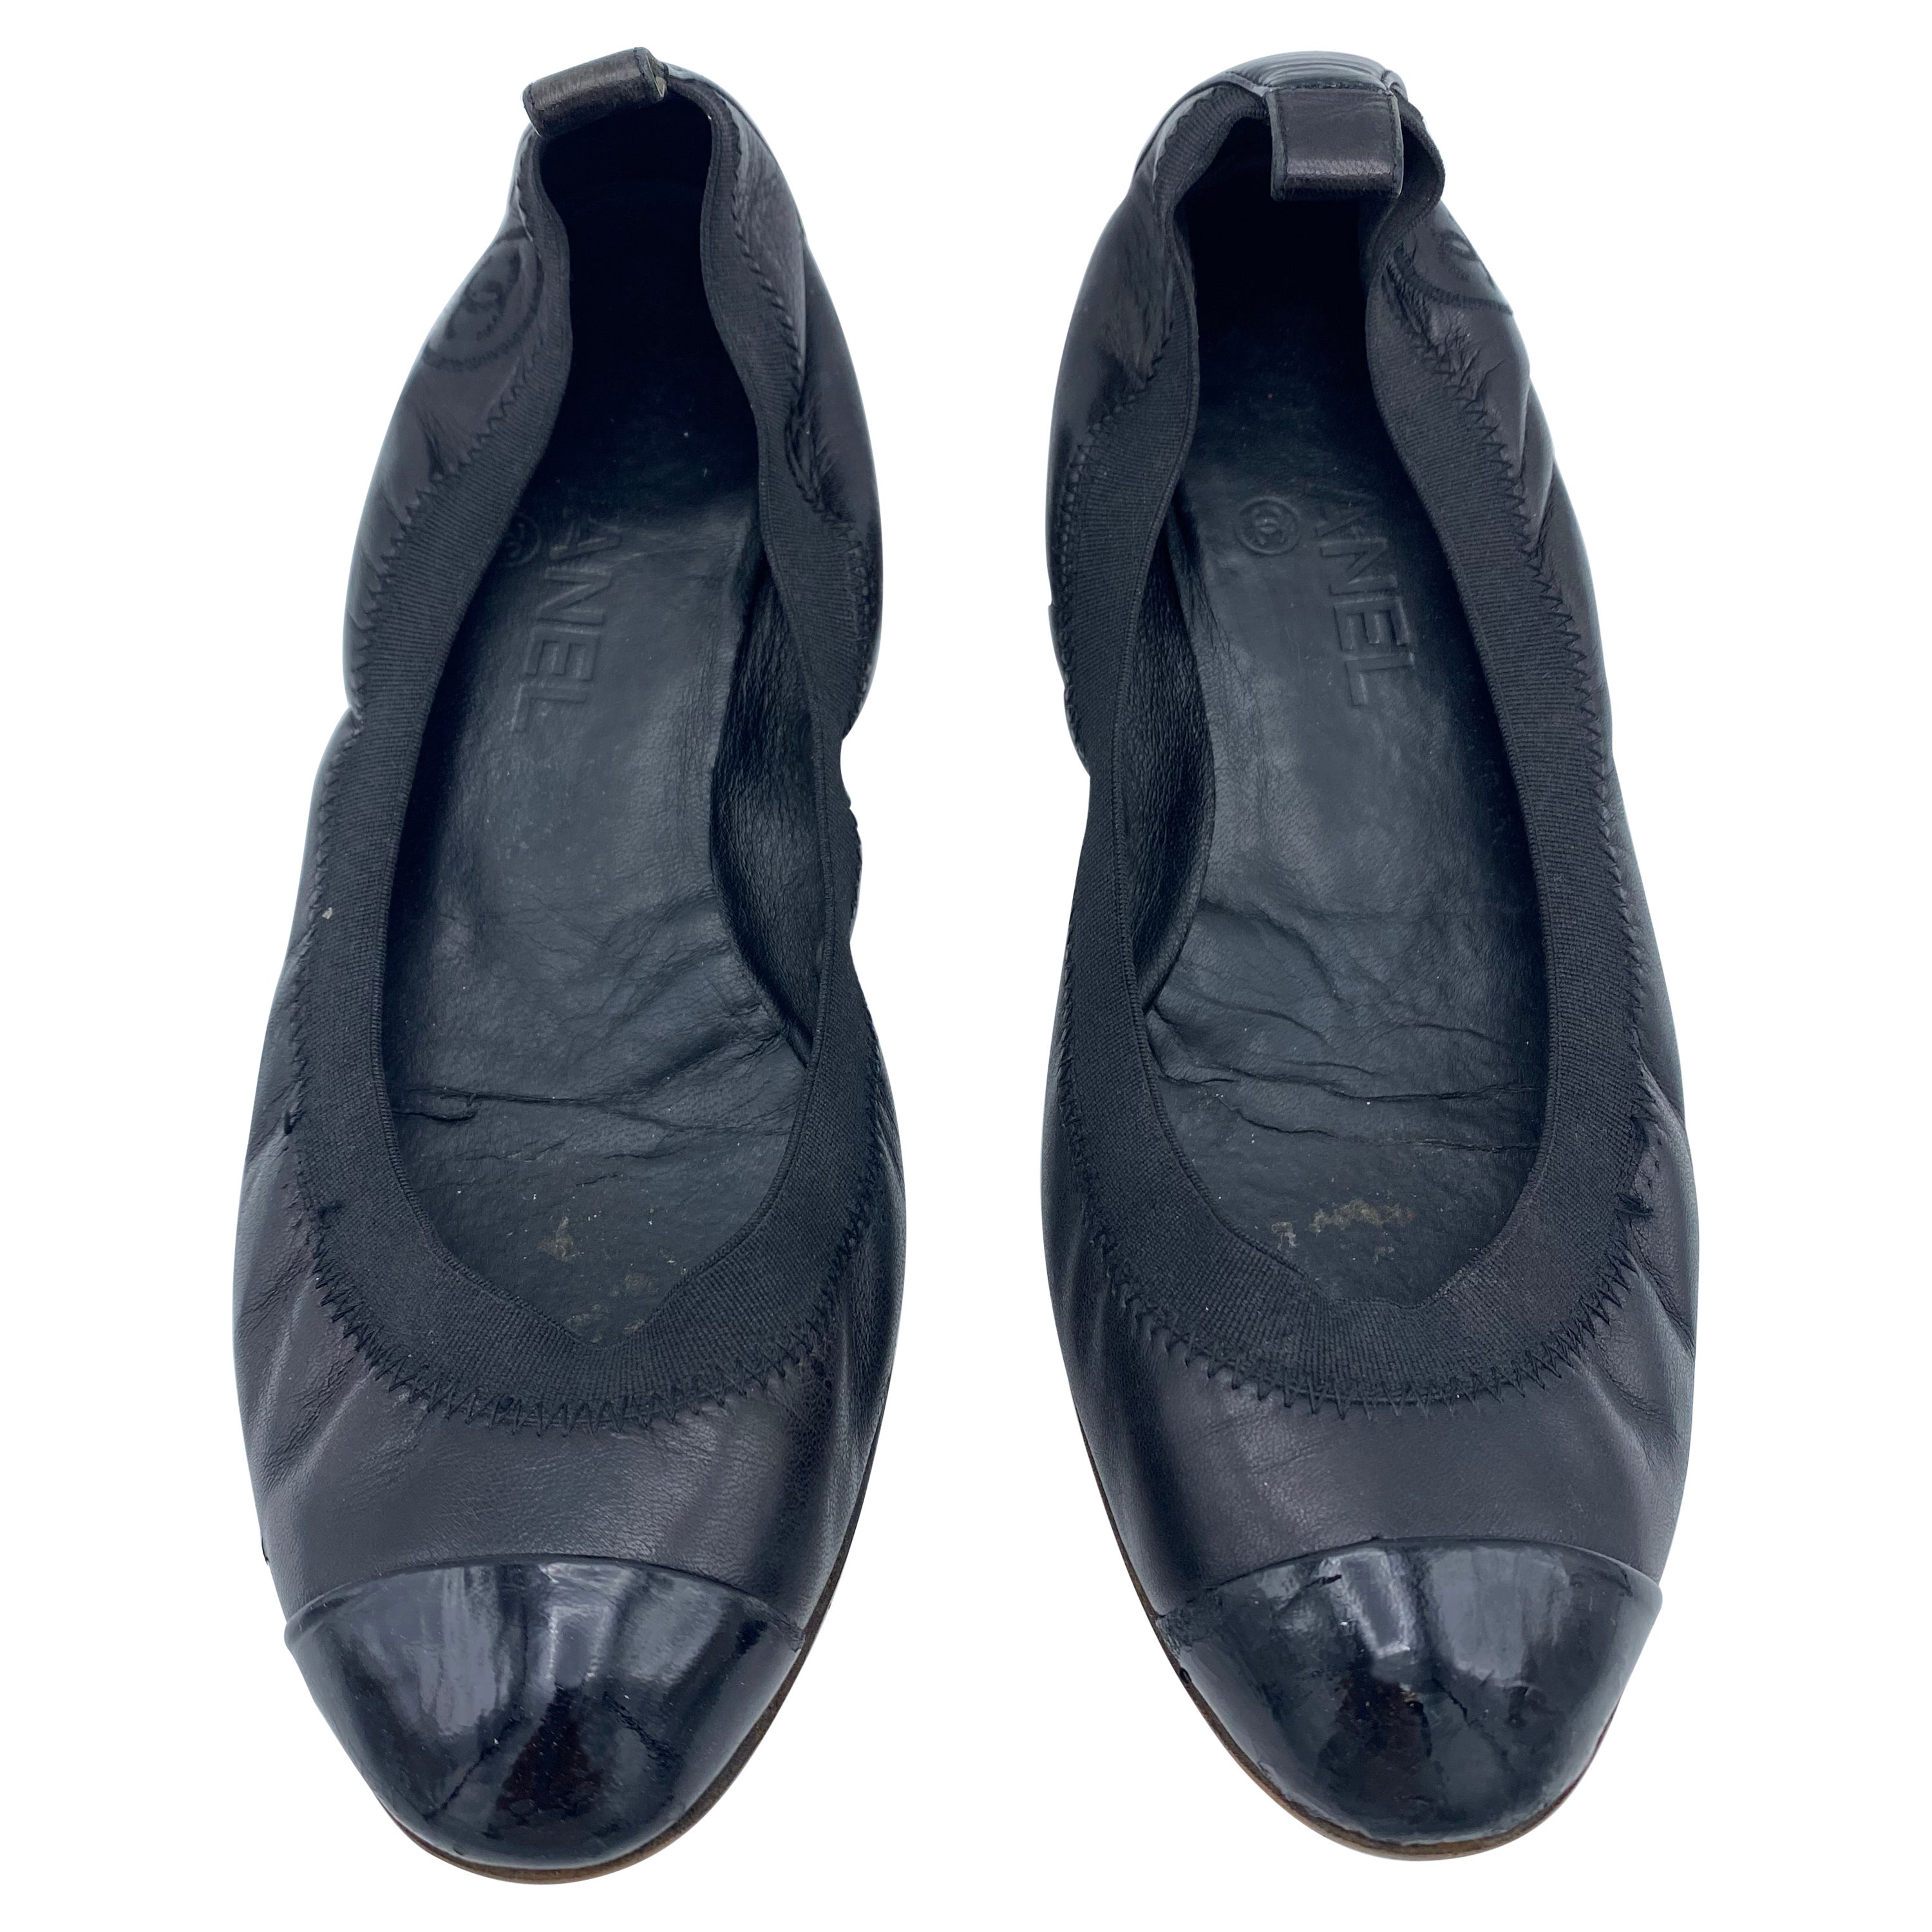 Chanel Black Leather Ballet Flat Shoes, Size 38